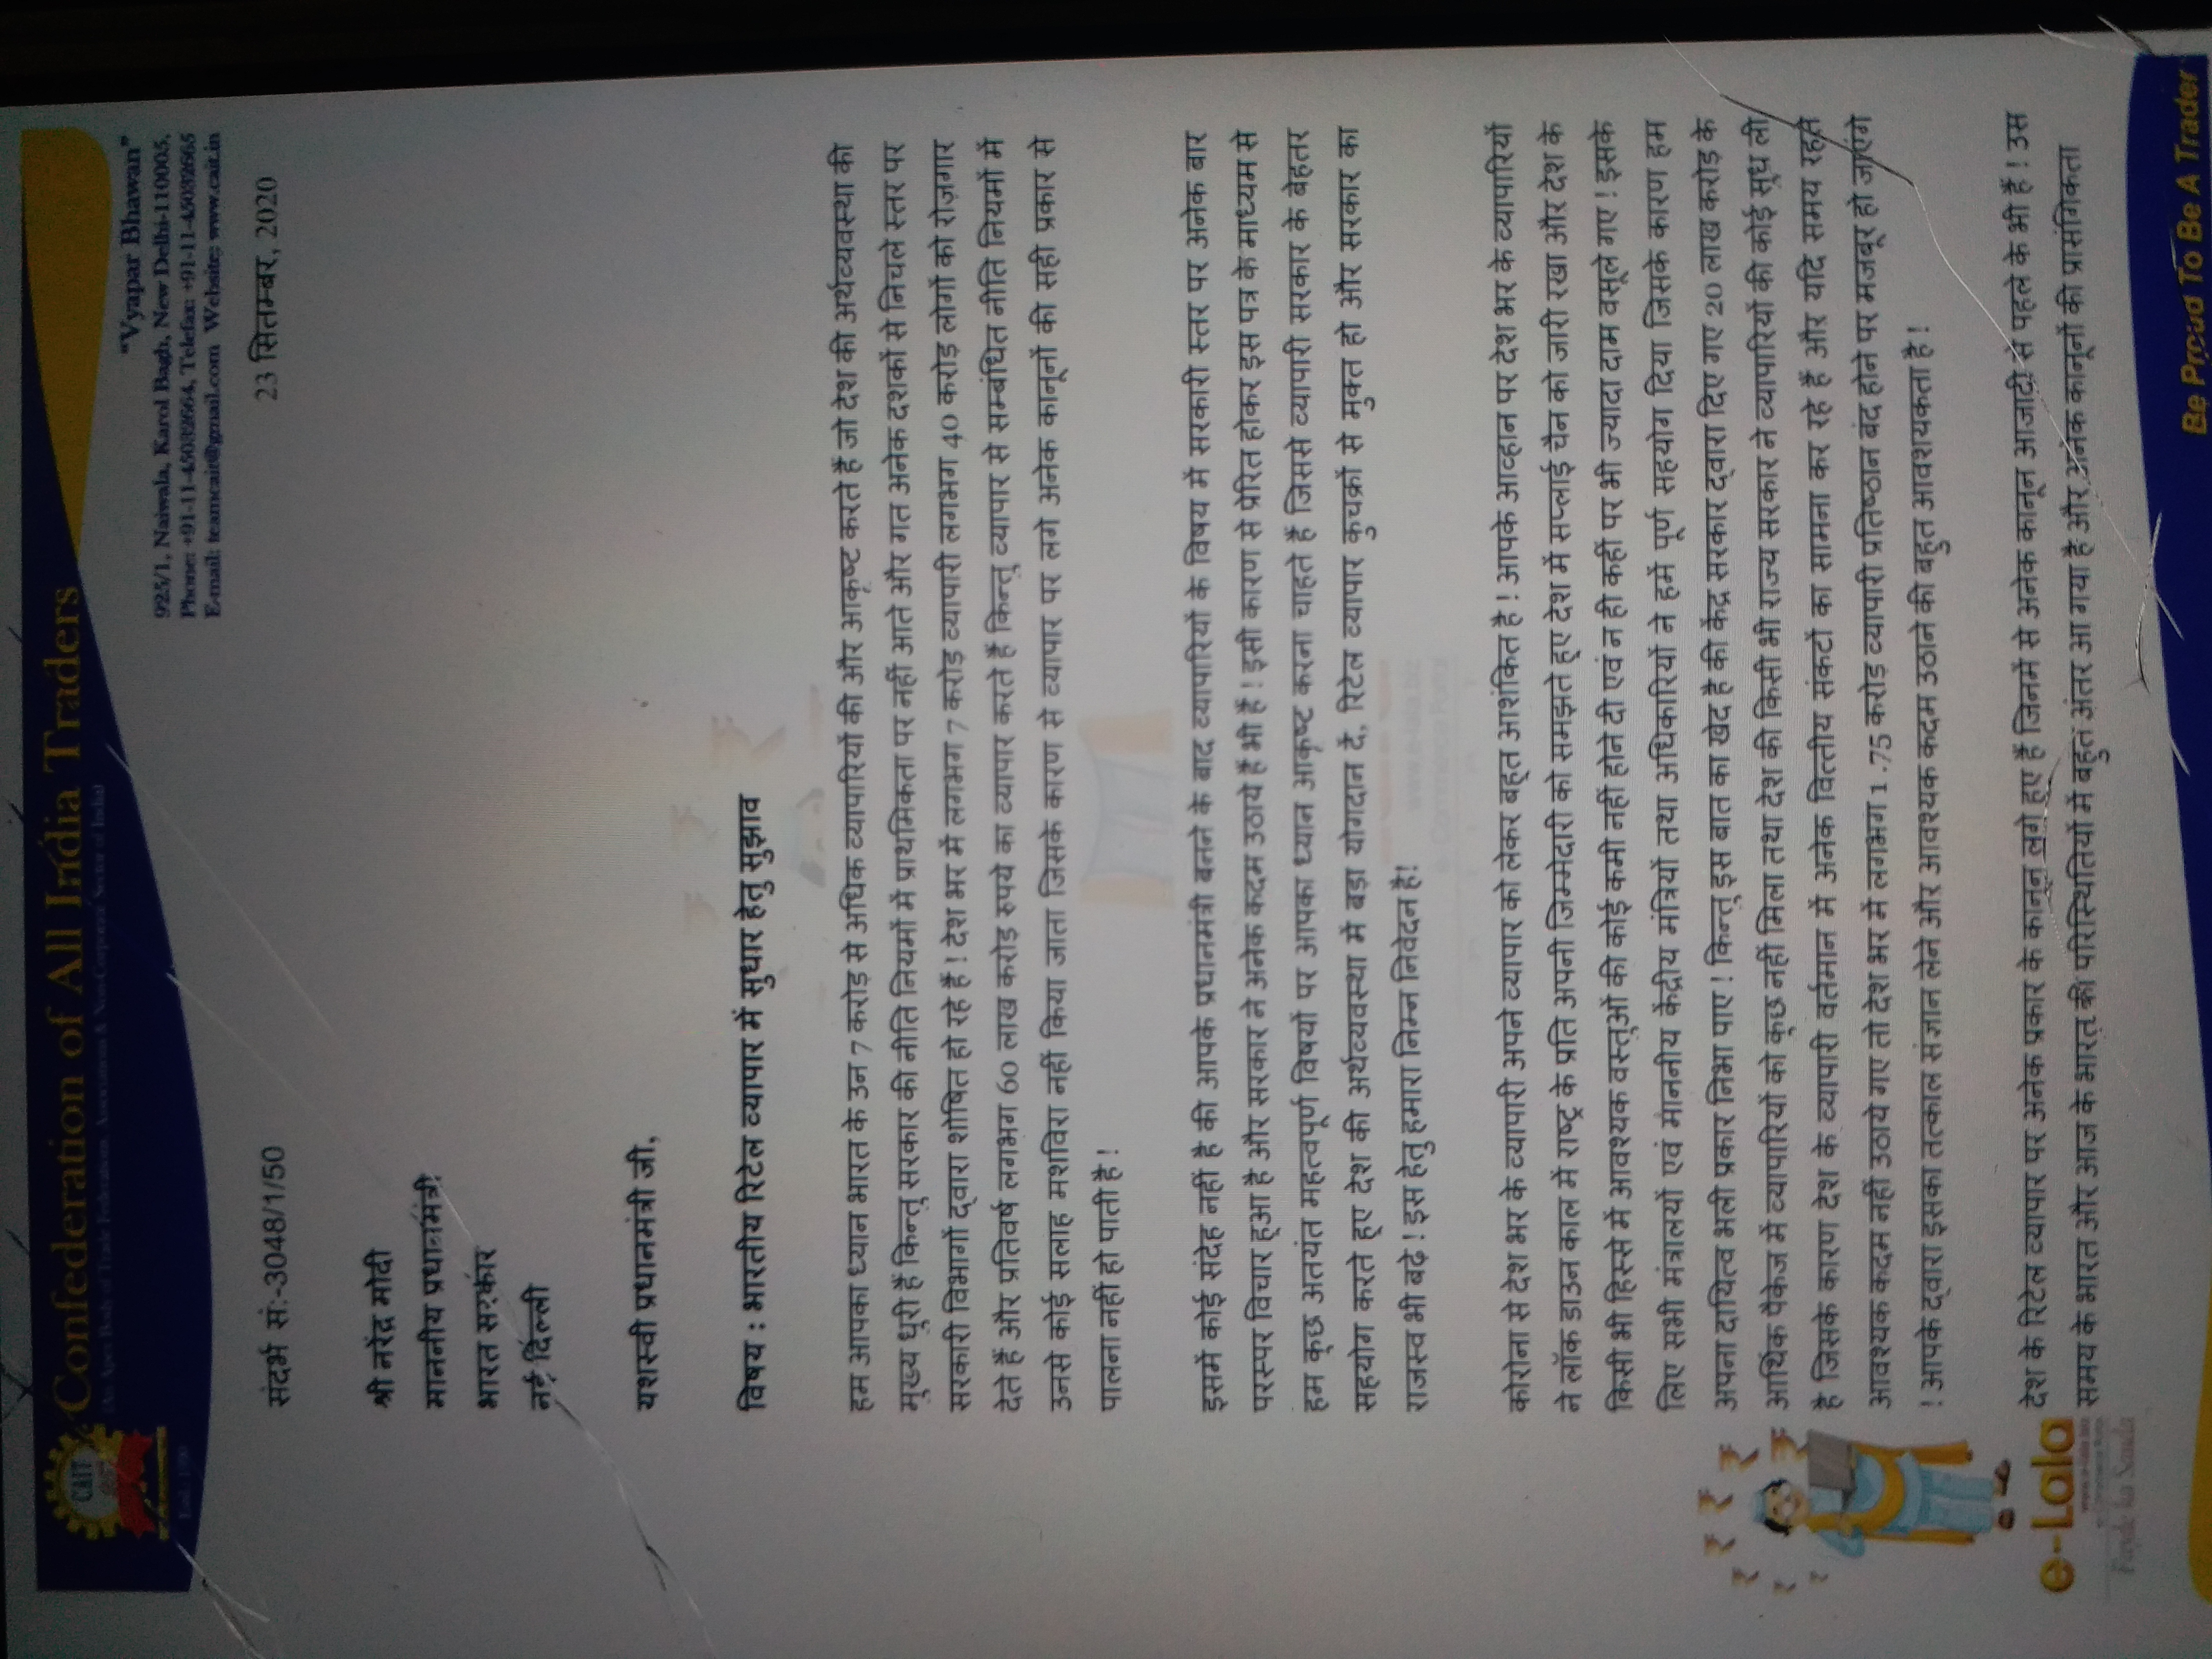 CAIT sent a memorandum to PM Narendra Modi on Wednesday through a letter